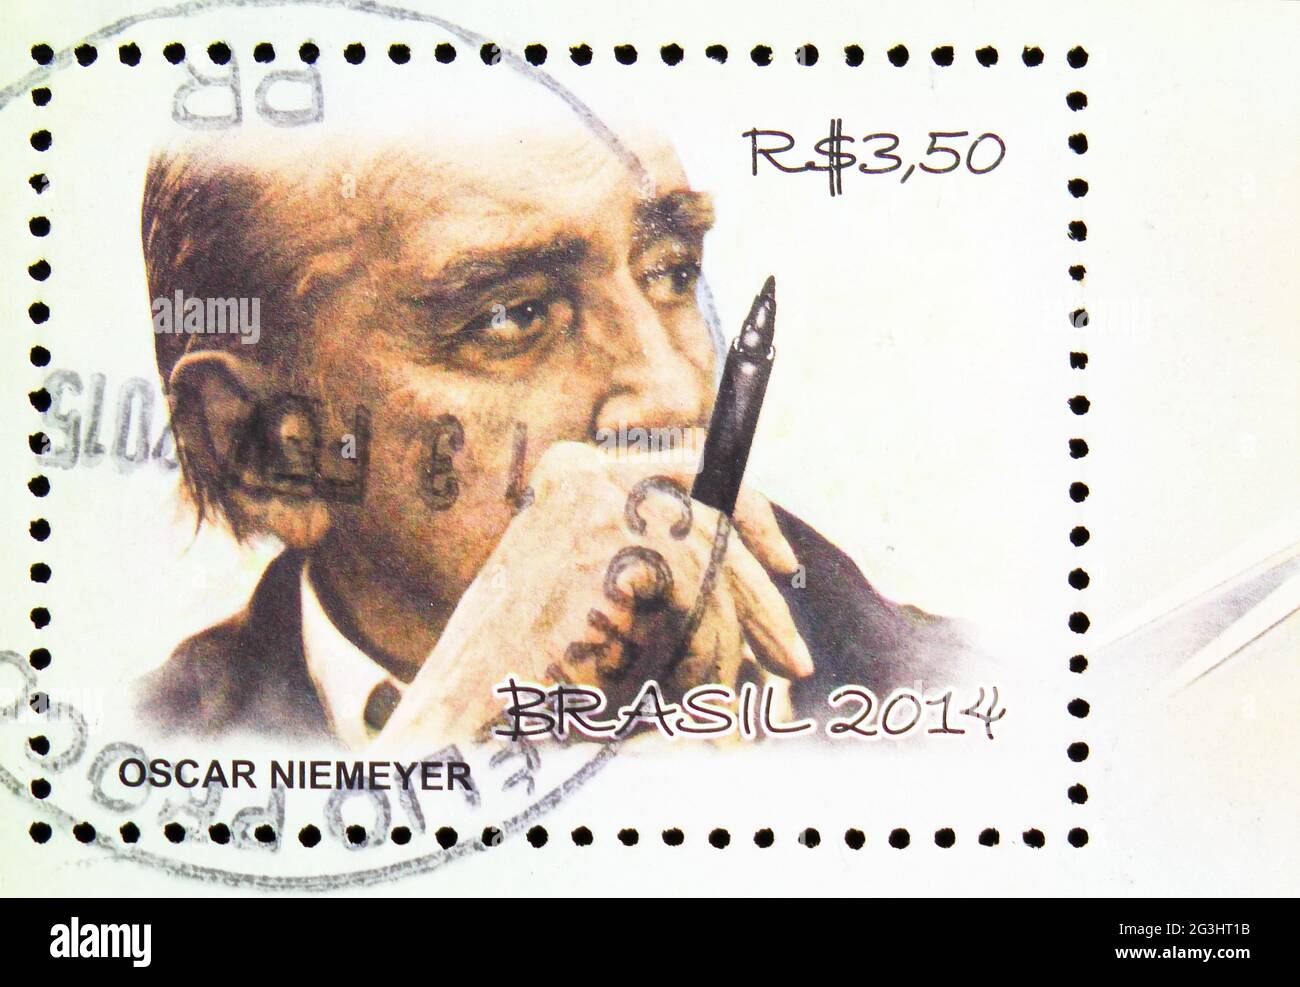 MOSCOW, RUSSIA - APRIL 15, 2021: Postage stamp printed in Brazil shows Portrait of Oscar Niemeyer, Tribute to Oscar Niemeyer serie, circa 2014 Stock Photo